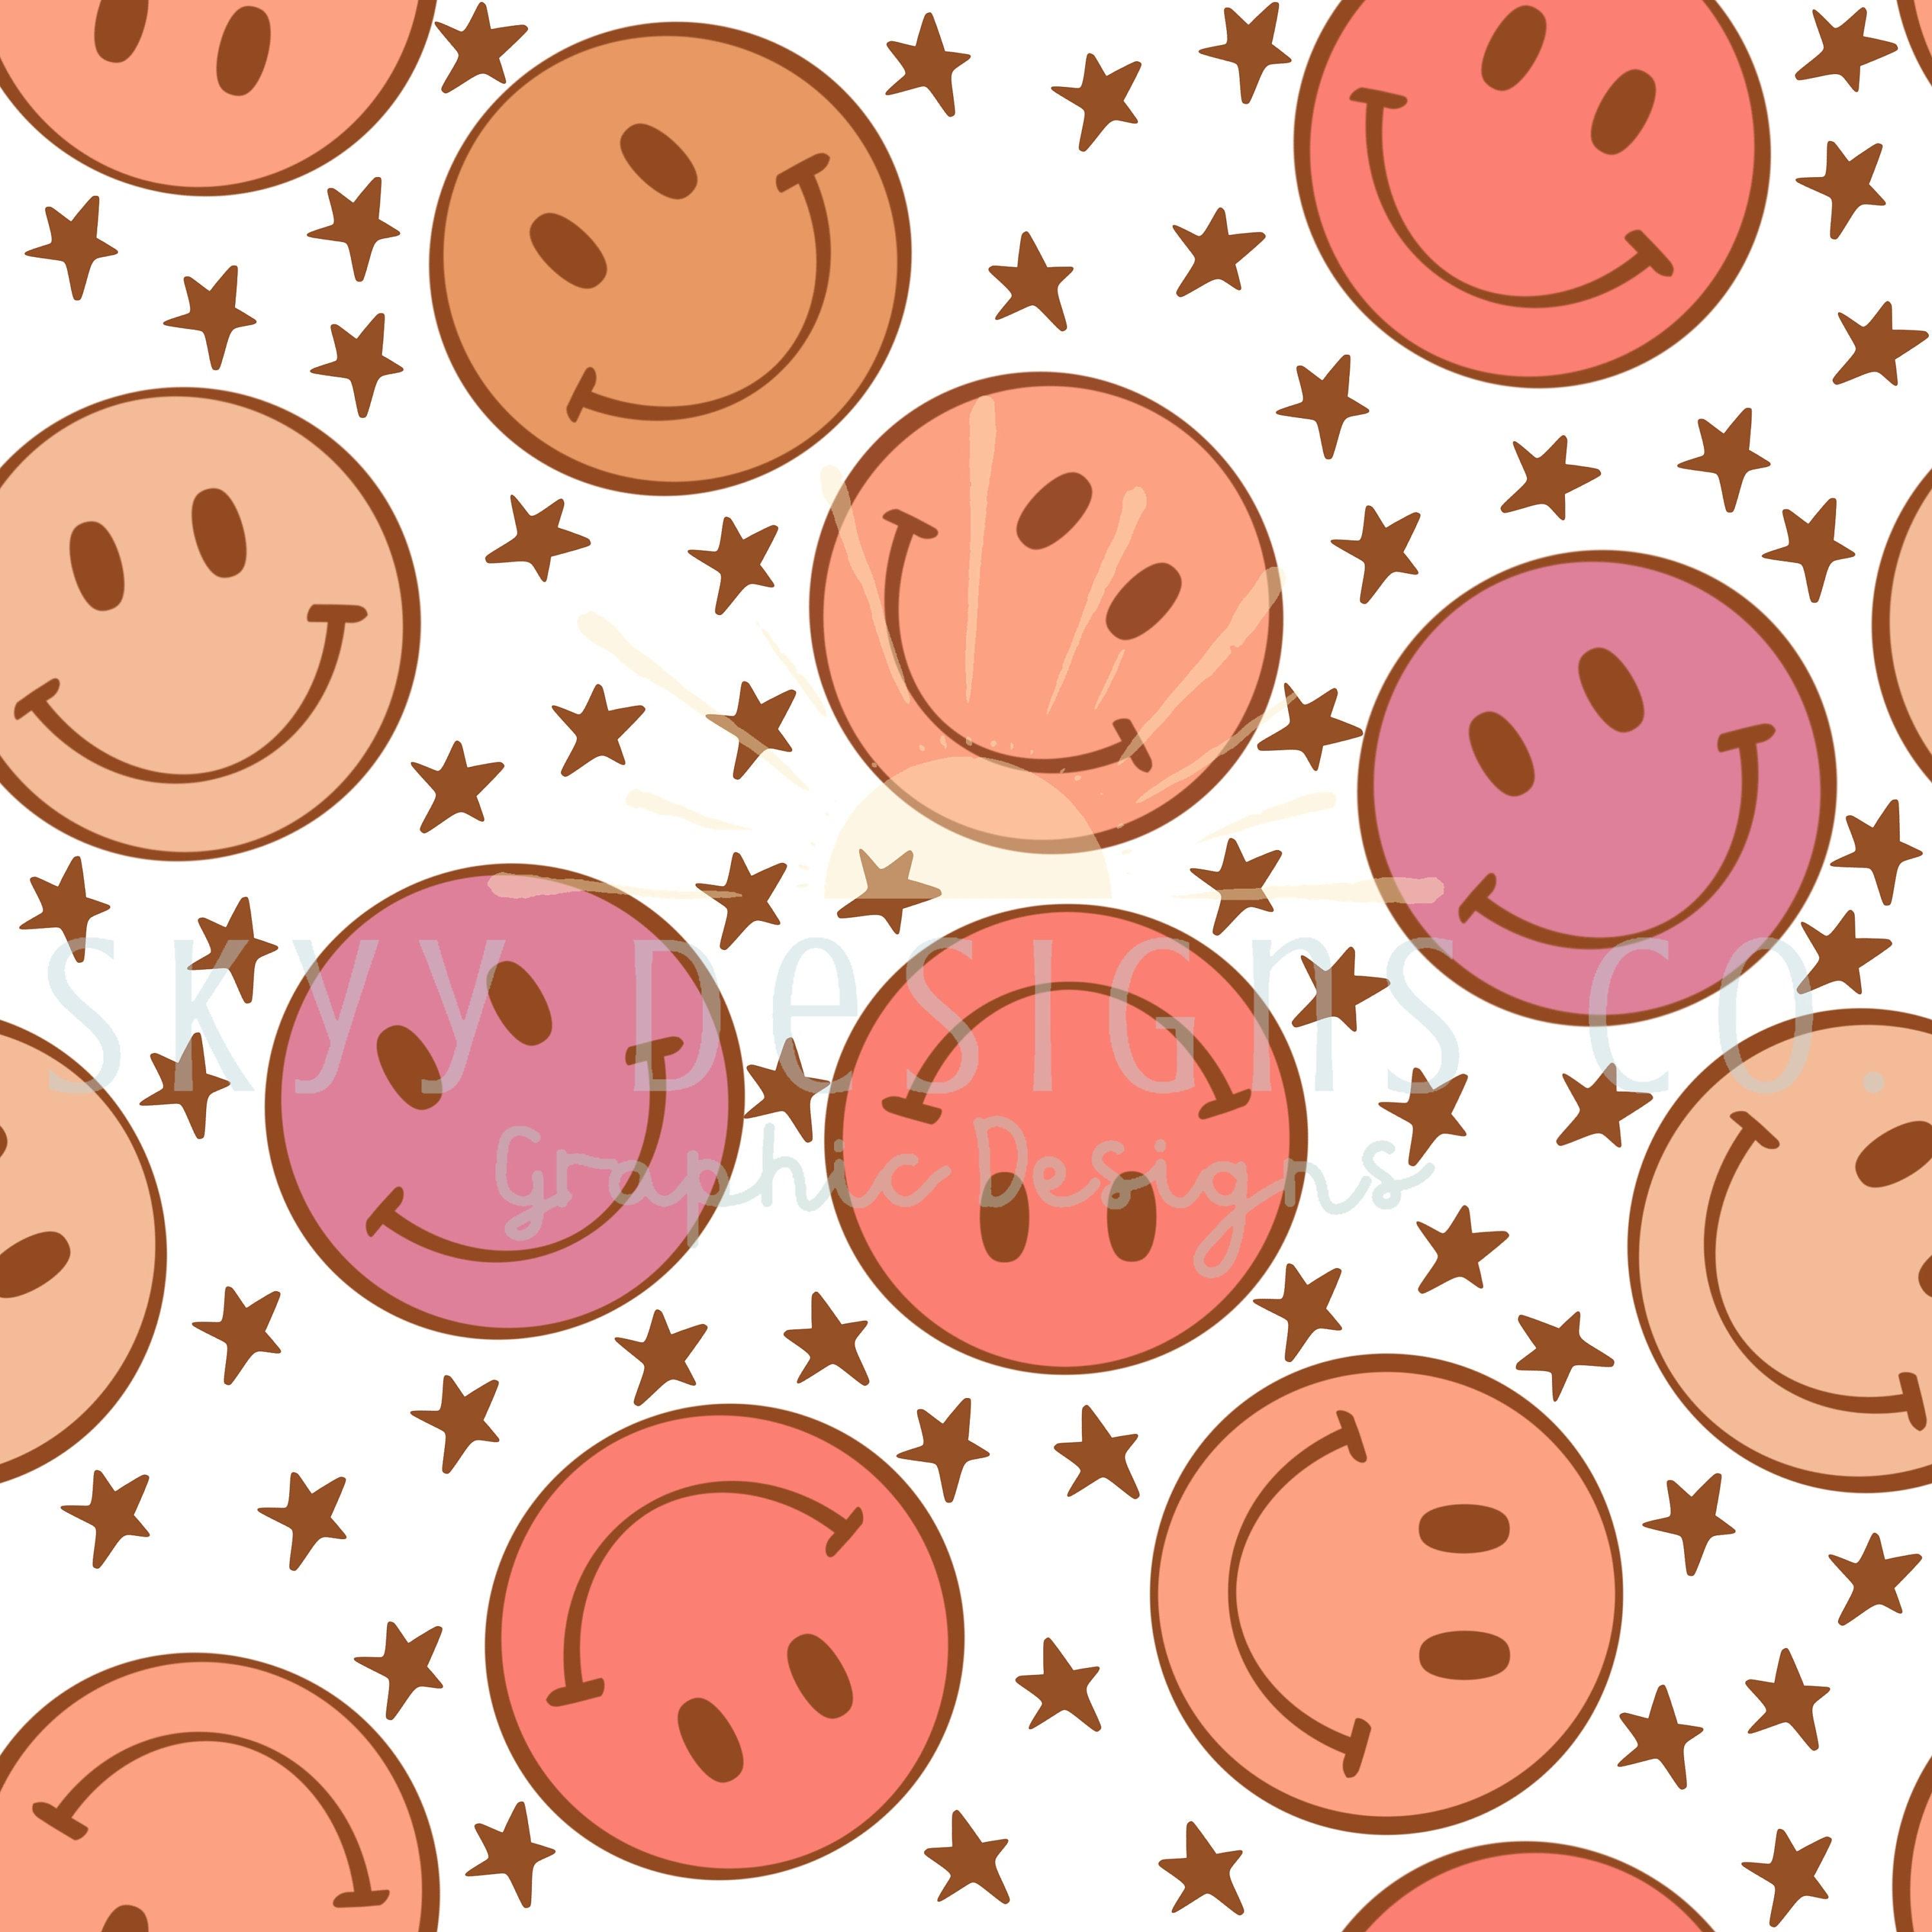 Best Preppy Smiley Faces Wallpaper